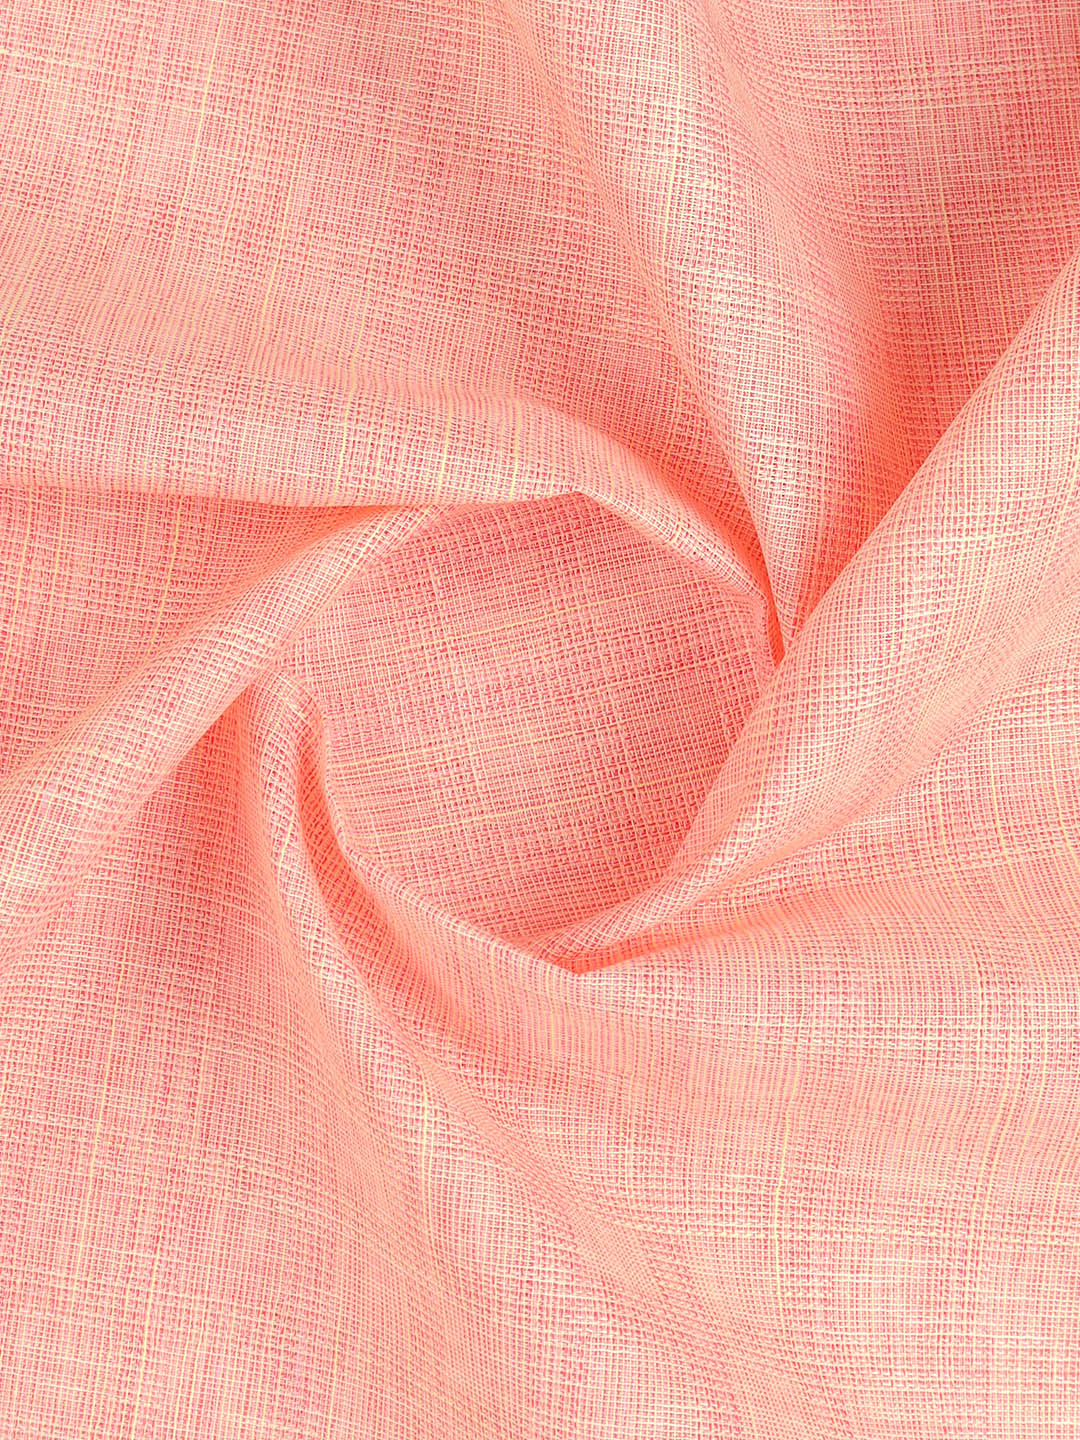 Cotton Rich Pink Checked Shirt Fabric _Galaxy Art